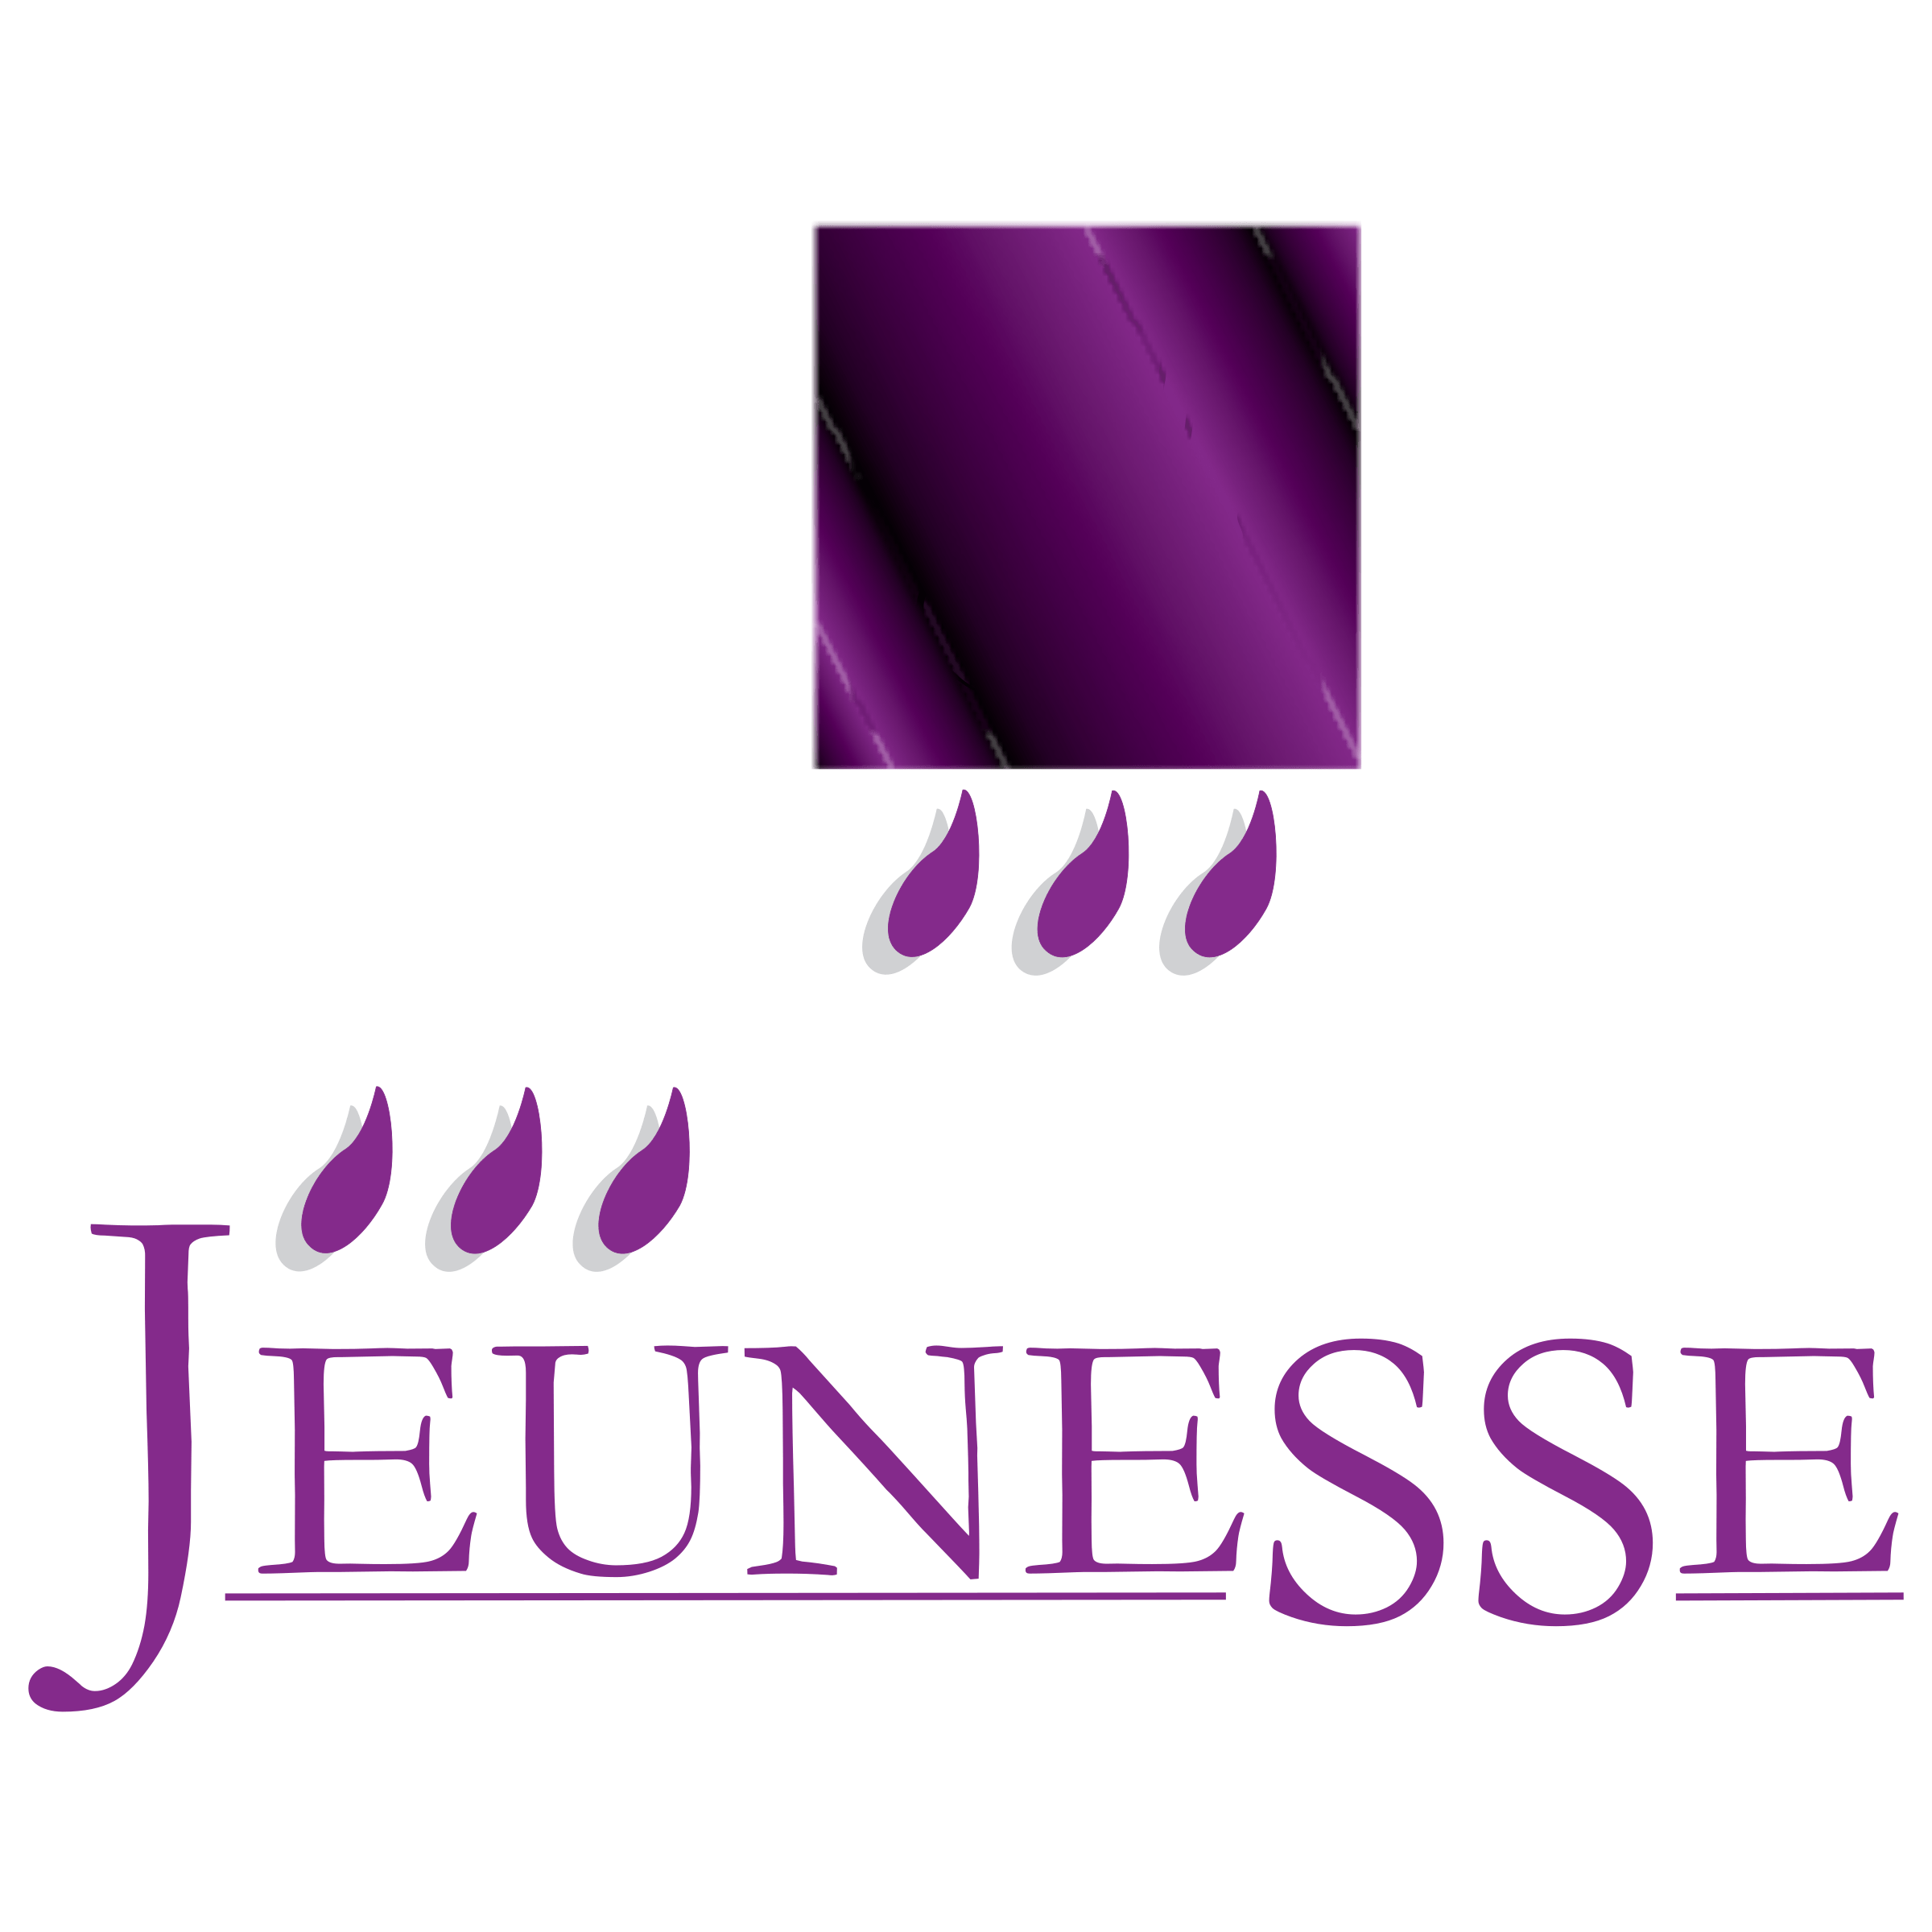 Jeunesse Logo - Jeunesse Logo PNG Transparent & SVG Vector - Freebie Supply